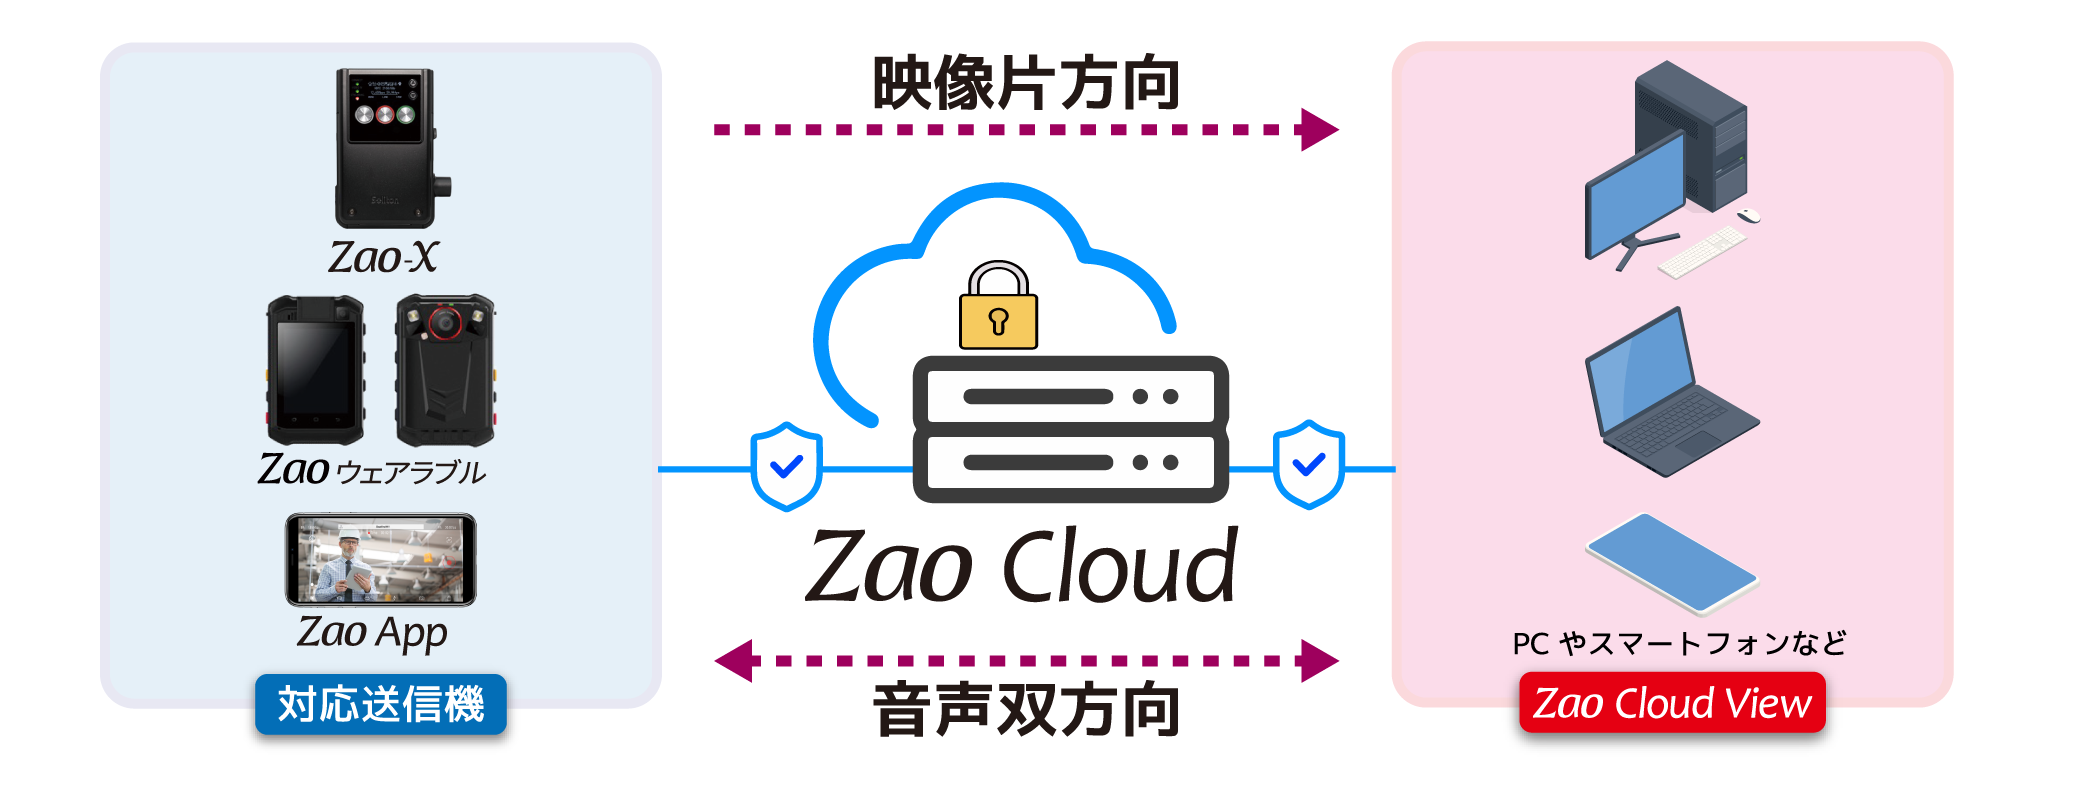 Zao Cloud Diagram